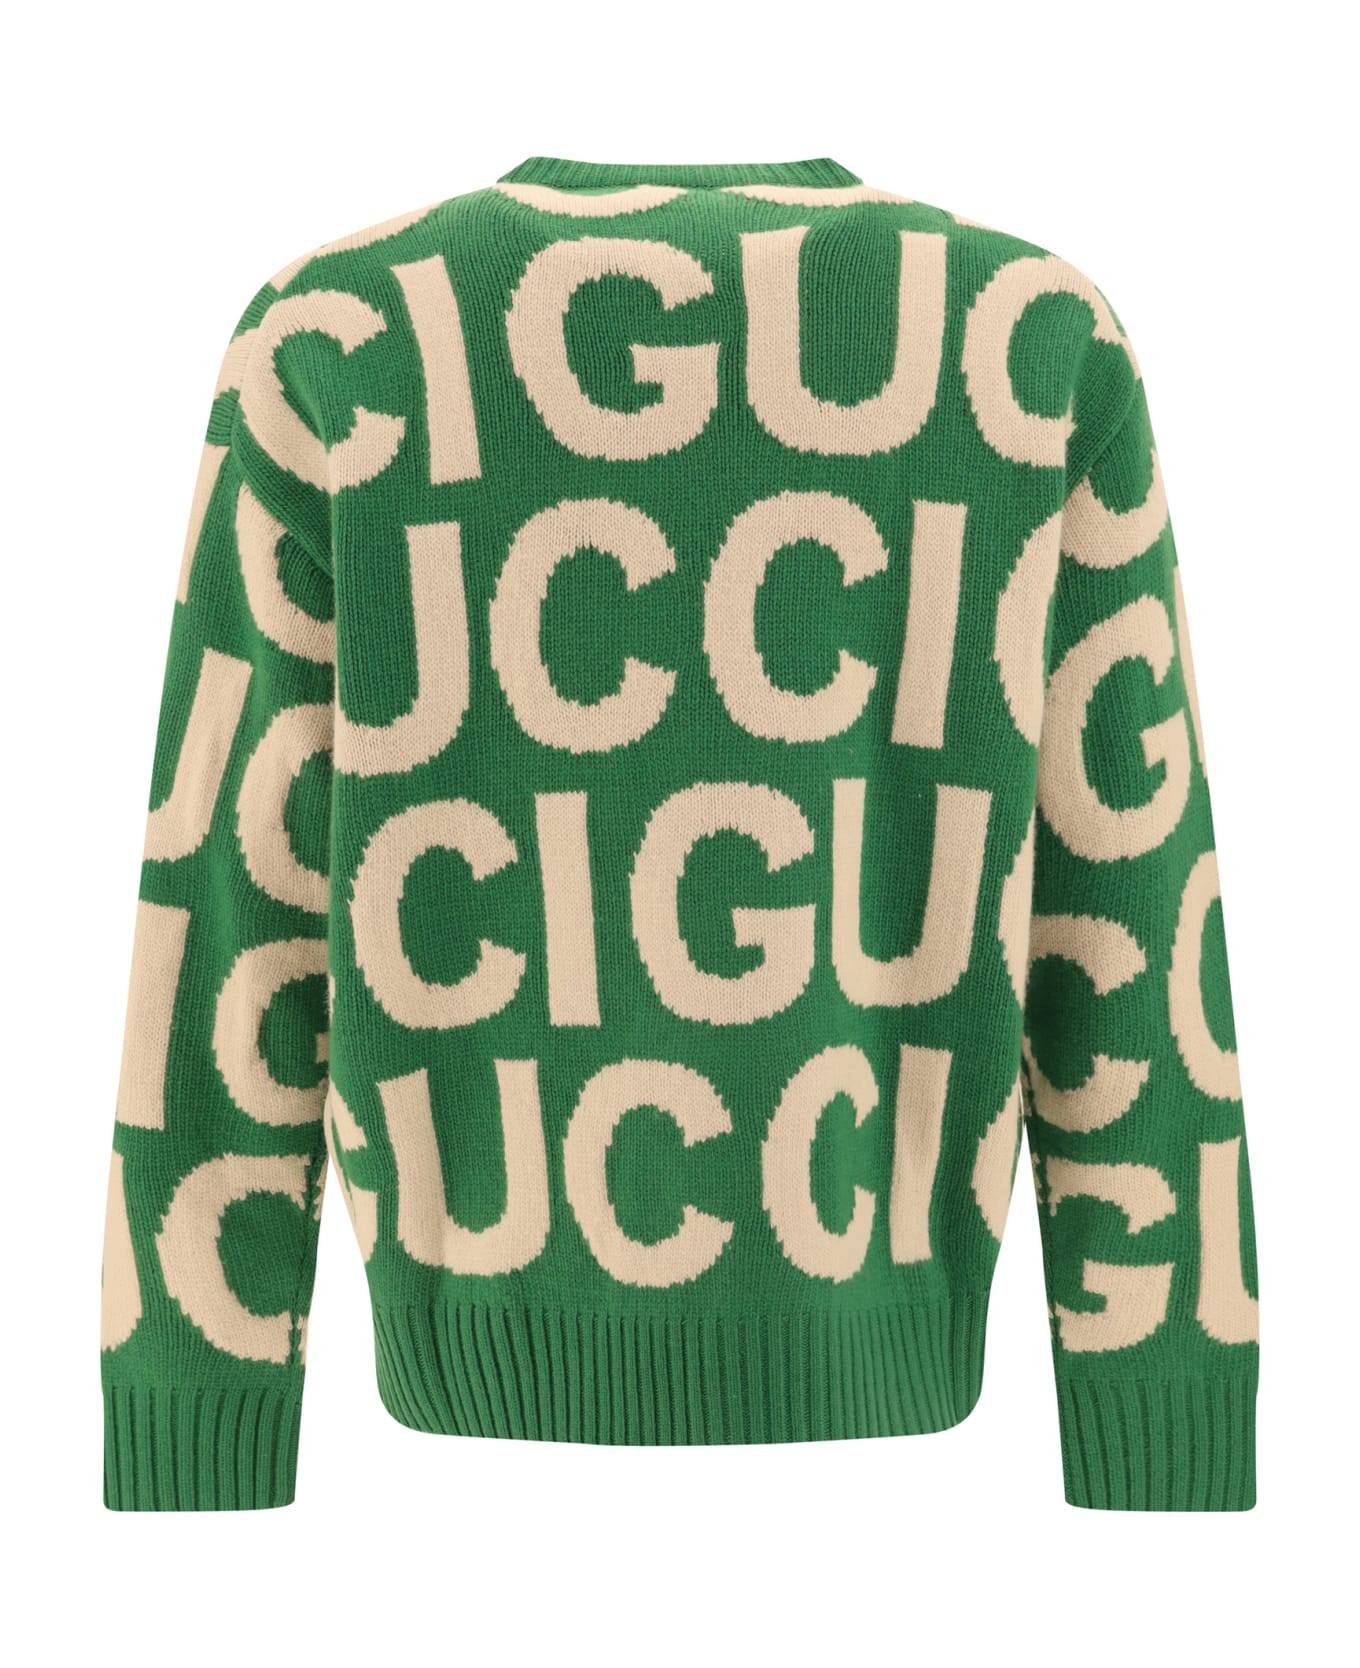 Gucci Sweater - Yard/ivory ニットウェア